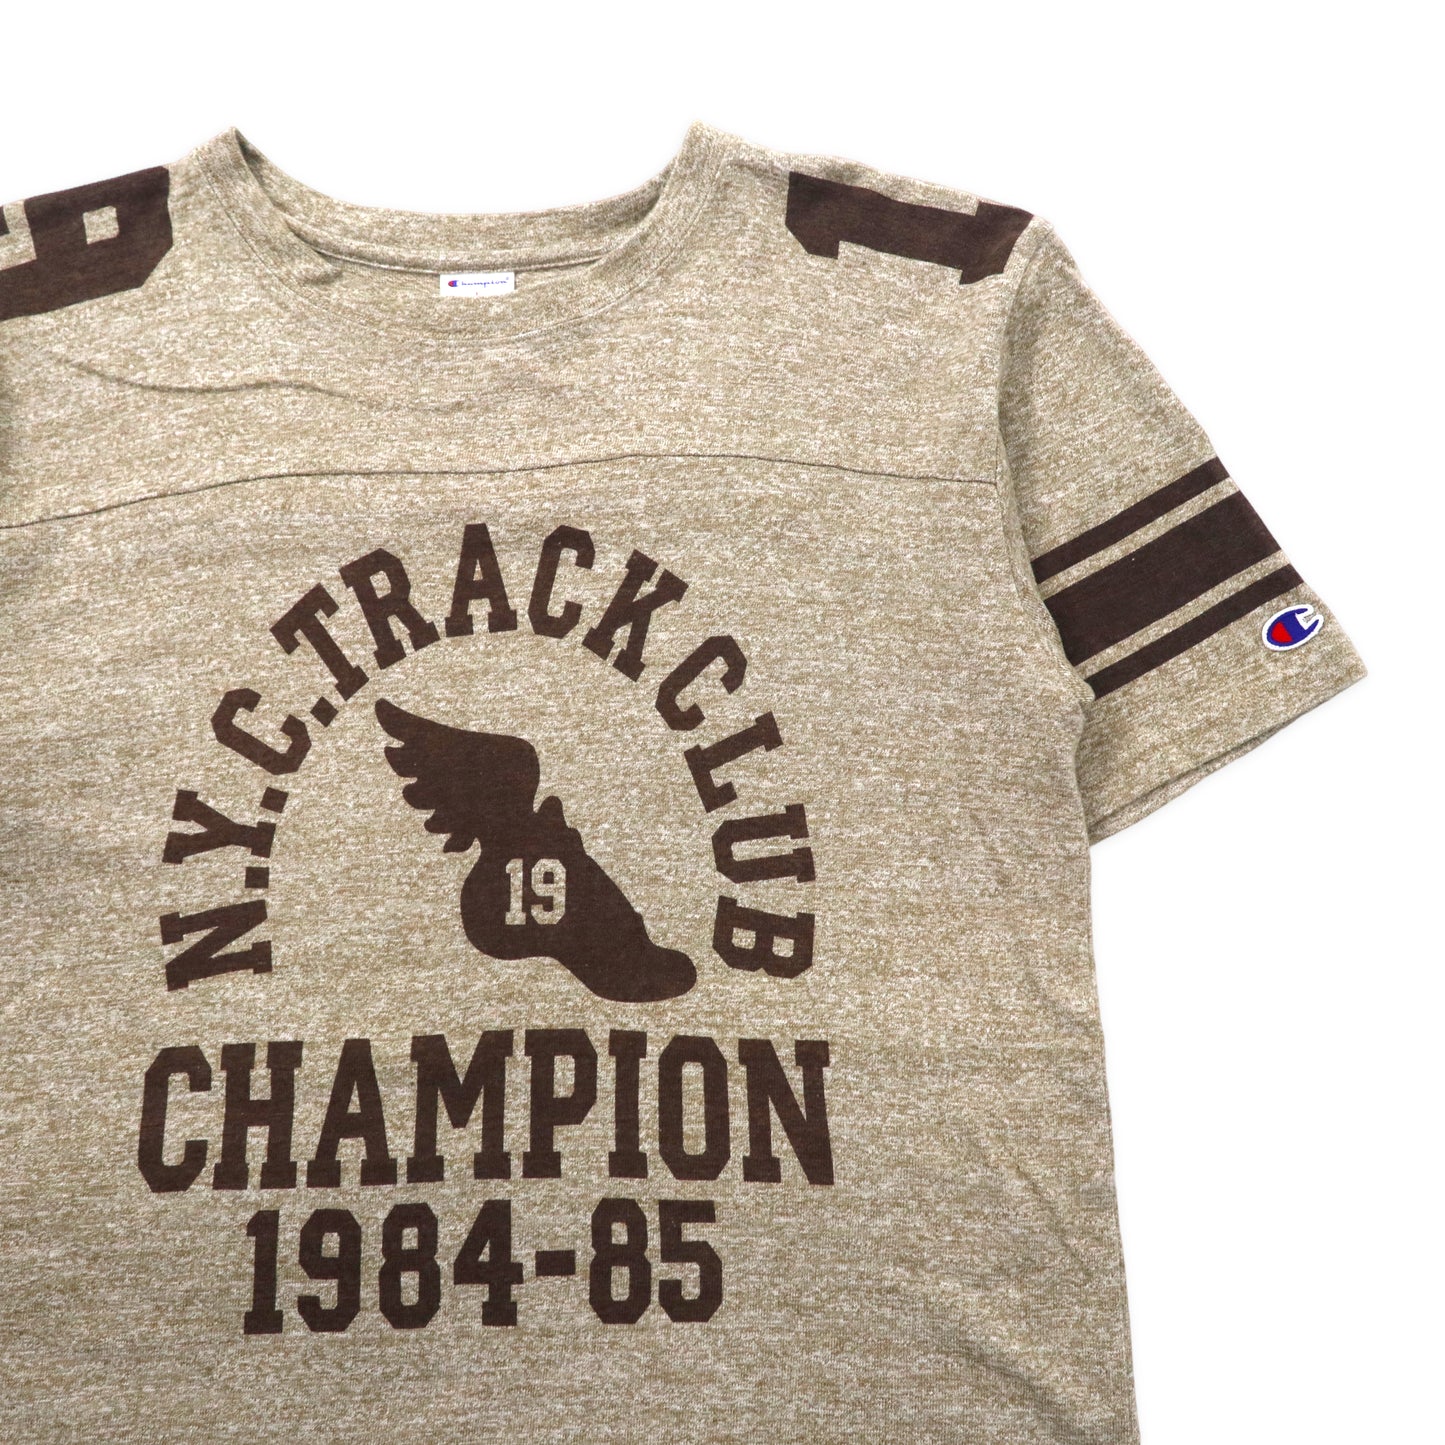 Champion フットボールTシャツ L ブラウン コットン 染み込みプリント N.Y.C. TRACK CLUB 1984-85 ナンバリング